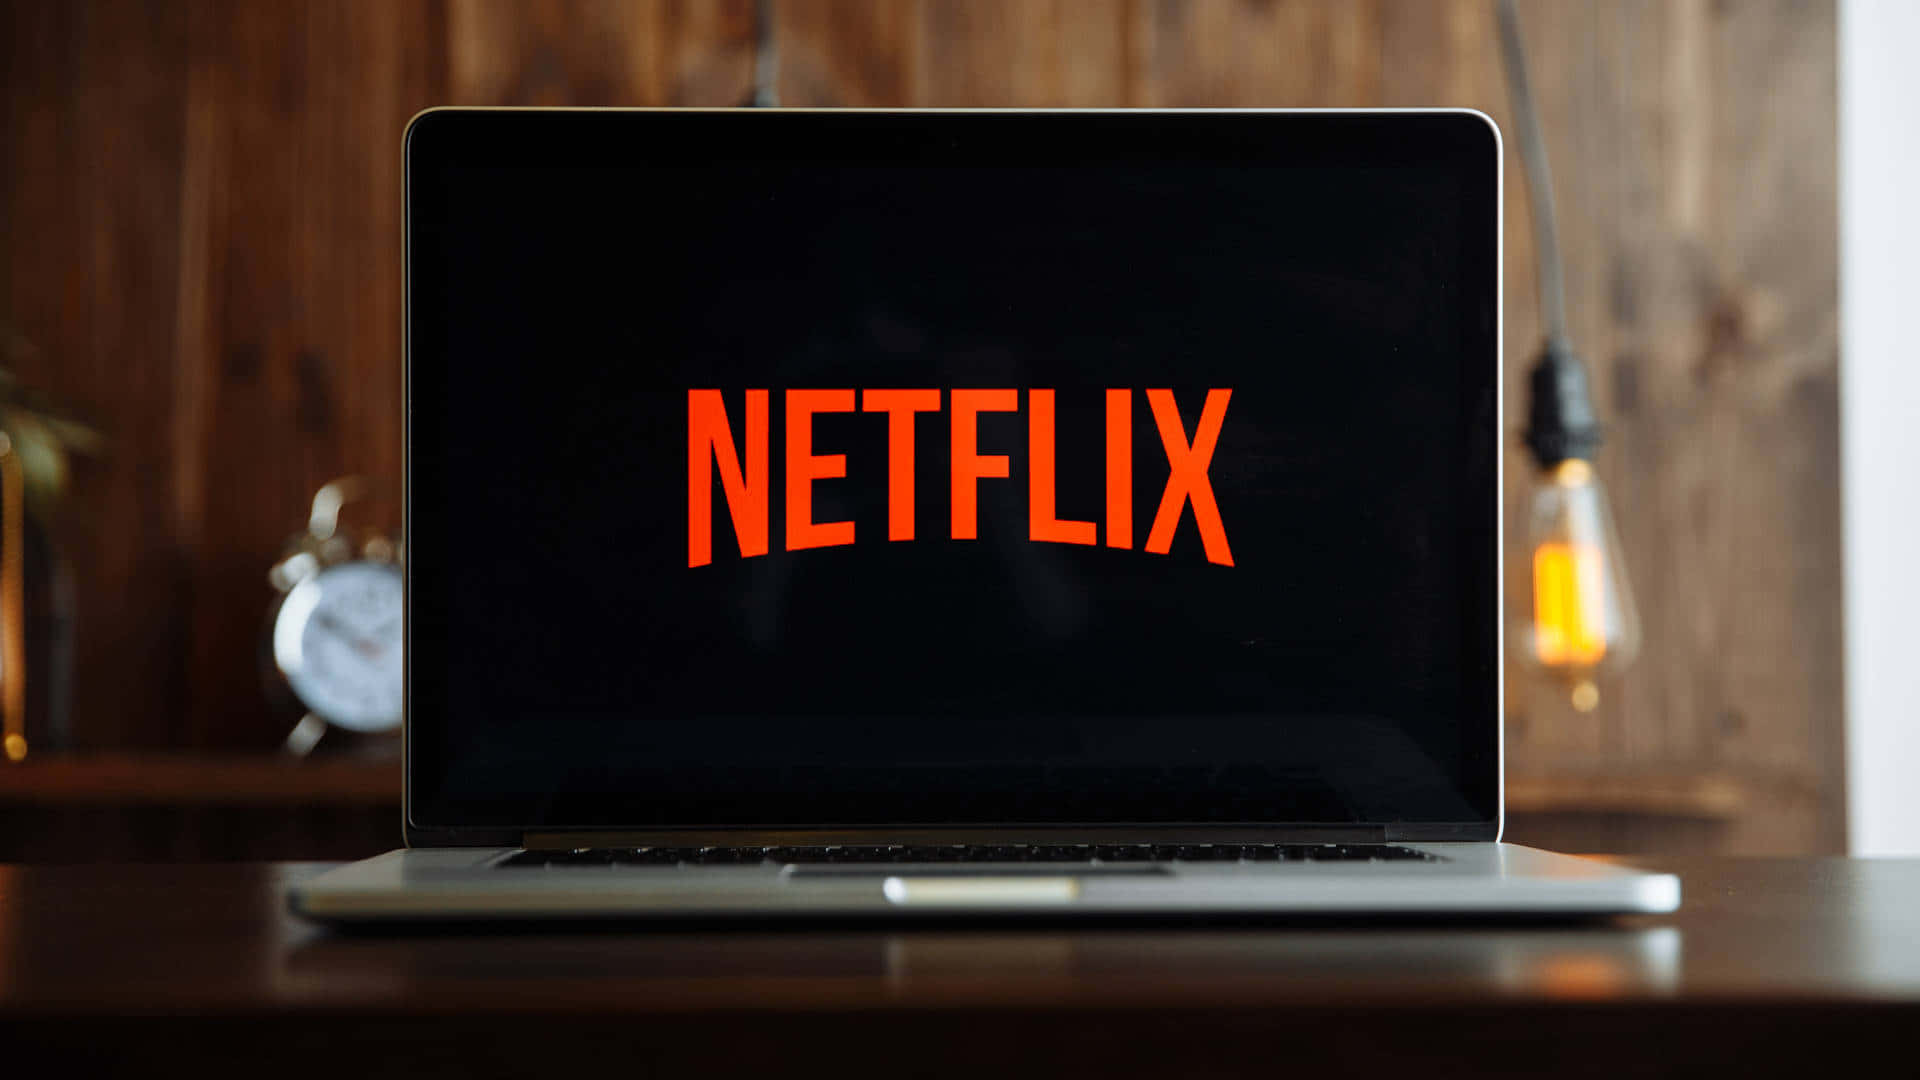 Netflix App Logo On Laptop Background